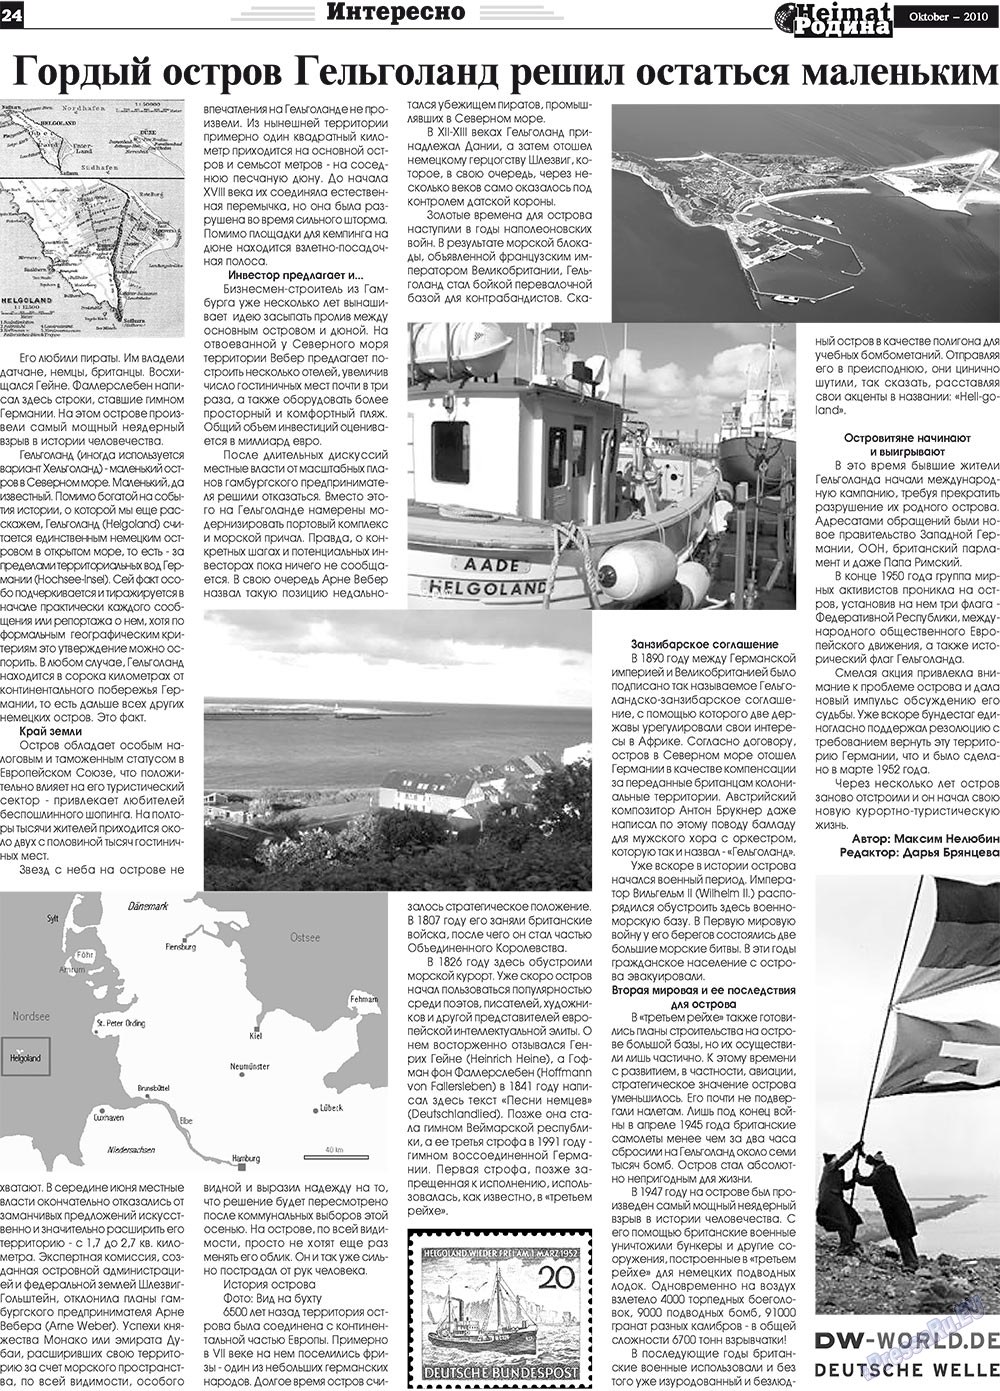 Heimat-Родина, газета. 2010 №10 стр.24